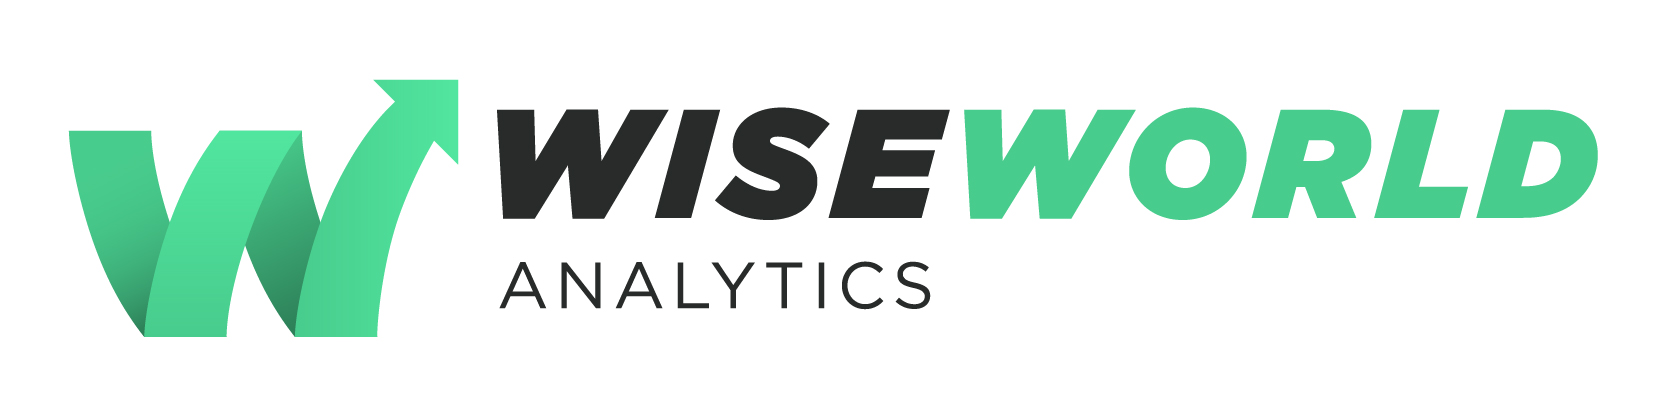 WiseWorld Analytics Ltd